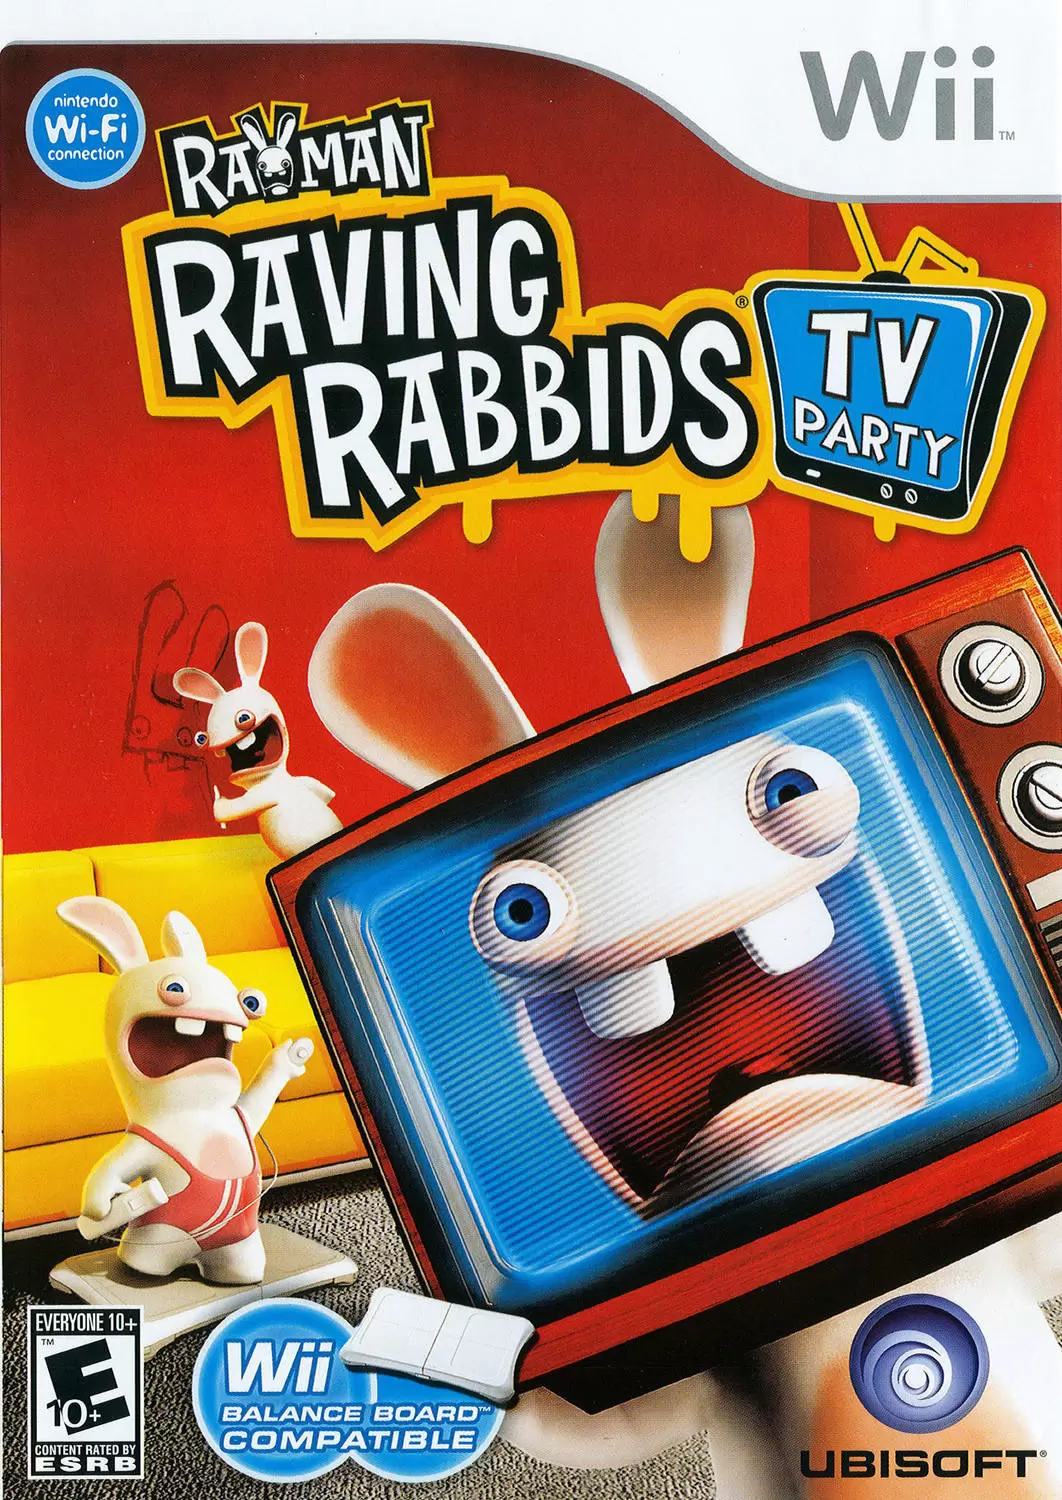 Nintendo Wii Games - Rayman Raving Rabbids TV Party